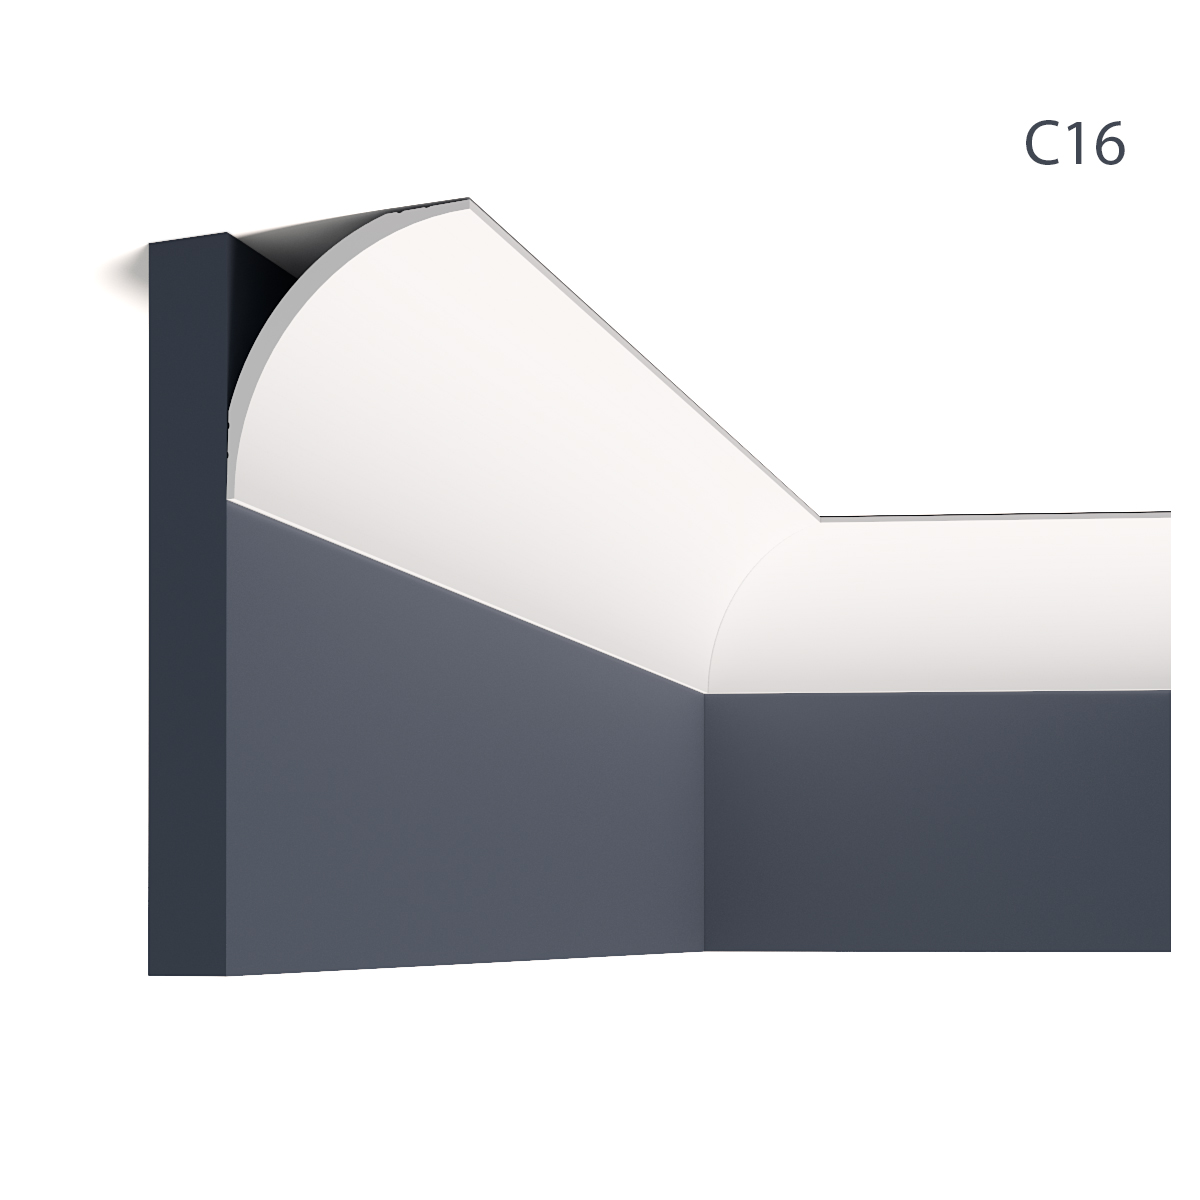 Cornișe tavan Manavi MNV-C16 - 8.7x8.7x200, material: polimer rigid